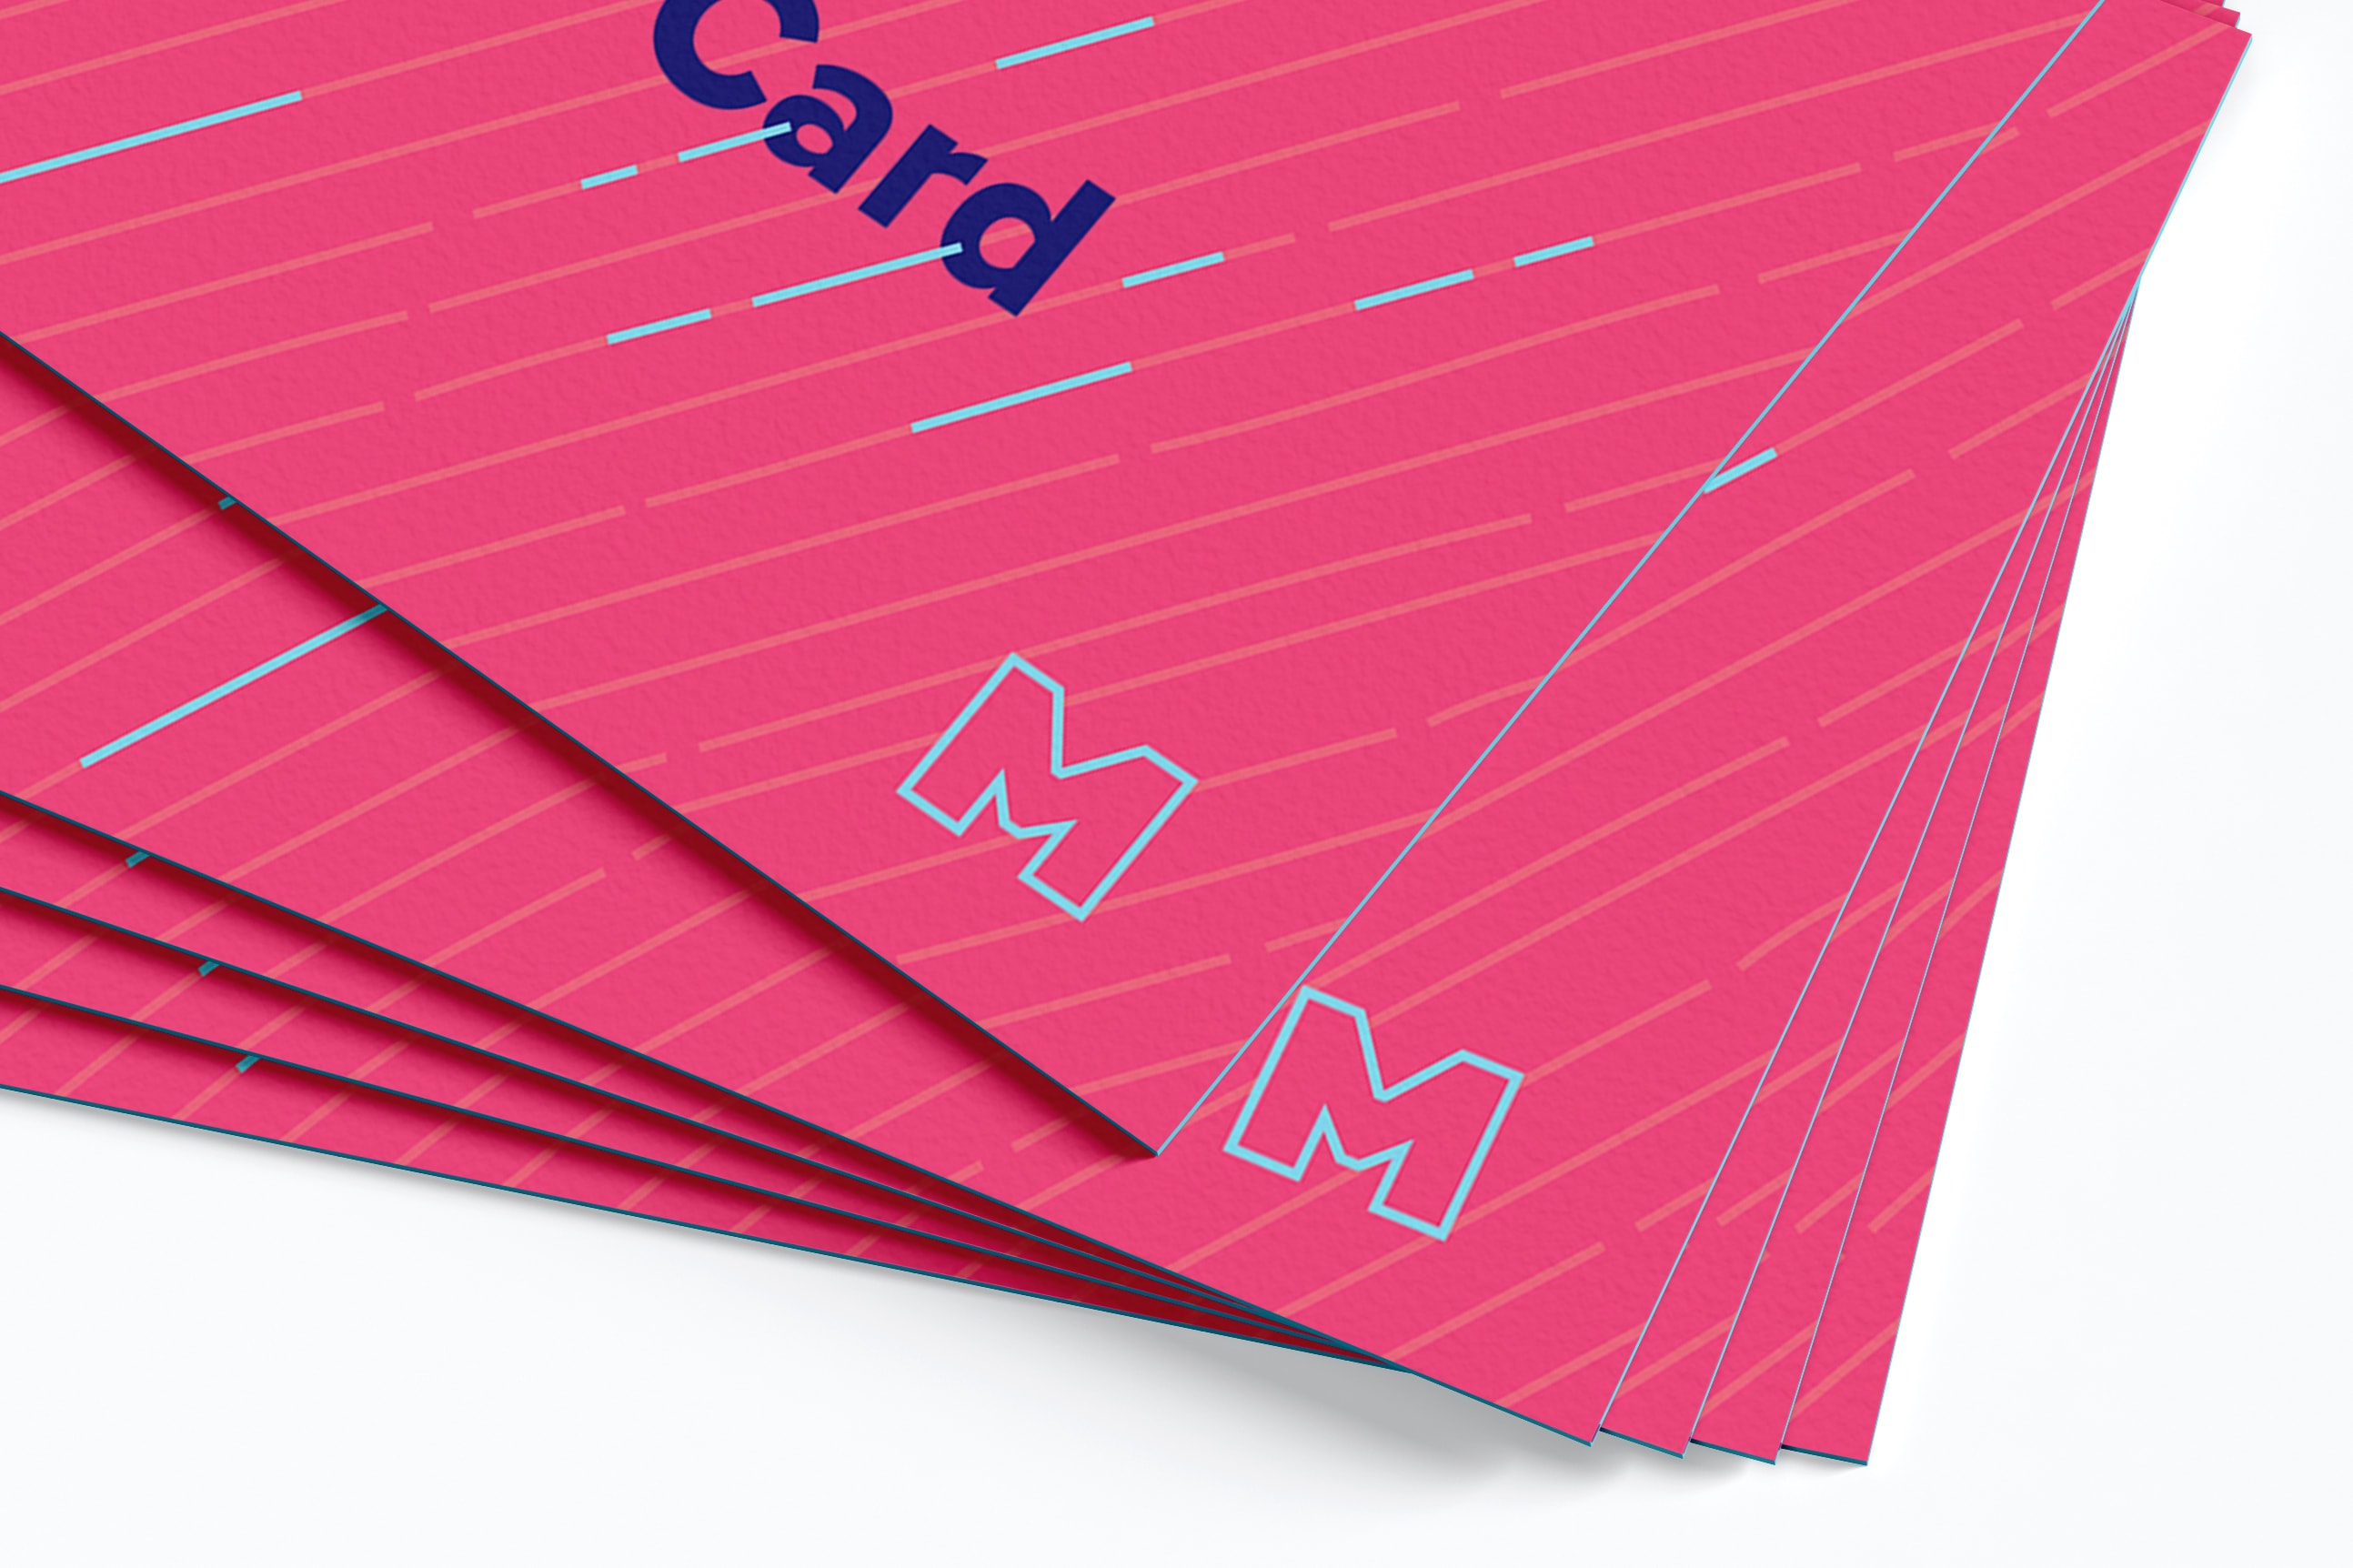 UK标准规格企业名片印刷效果图样机02 UK Business Cards Mockup 02插图(1)